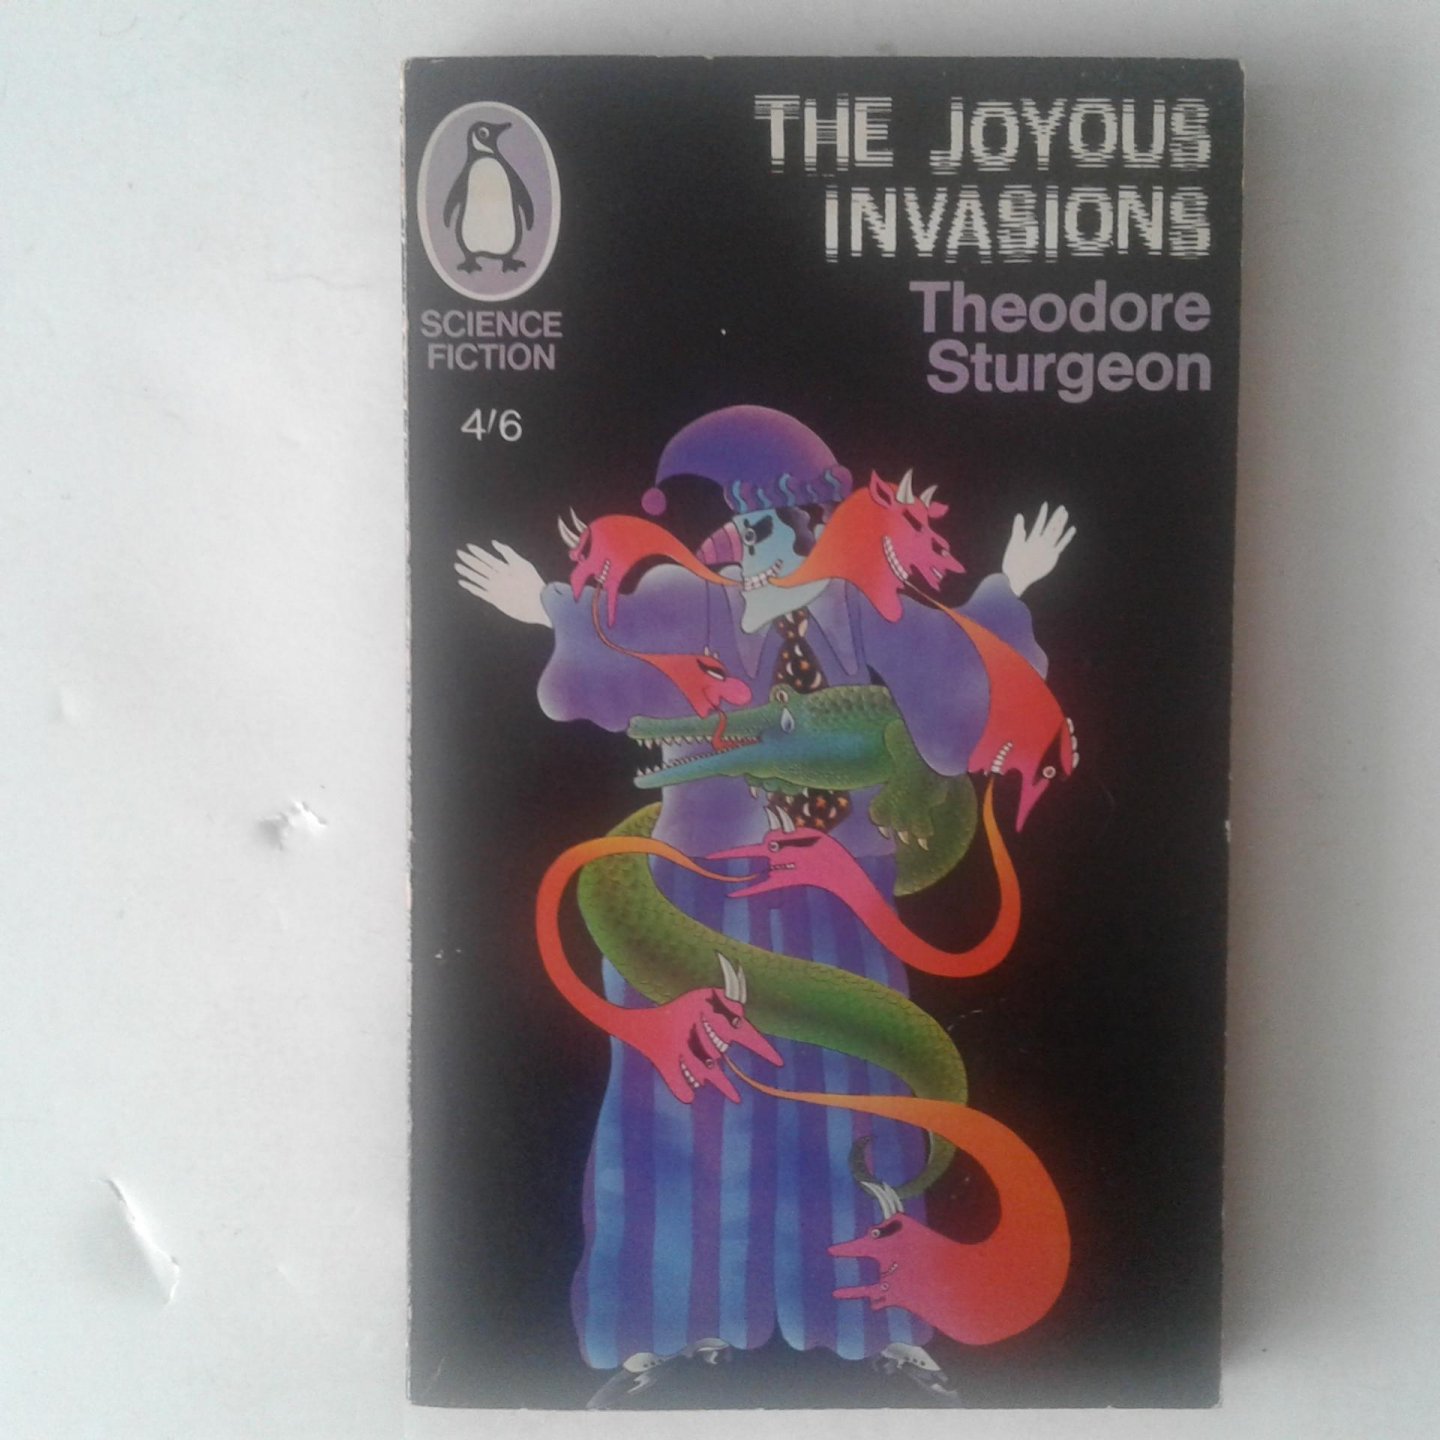 Sturgeon, Theodore - The Joyous Invasions